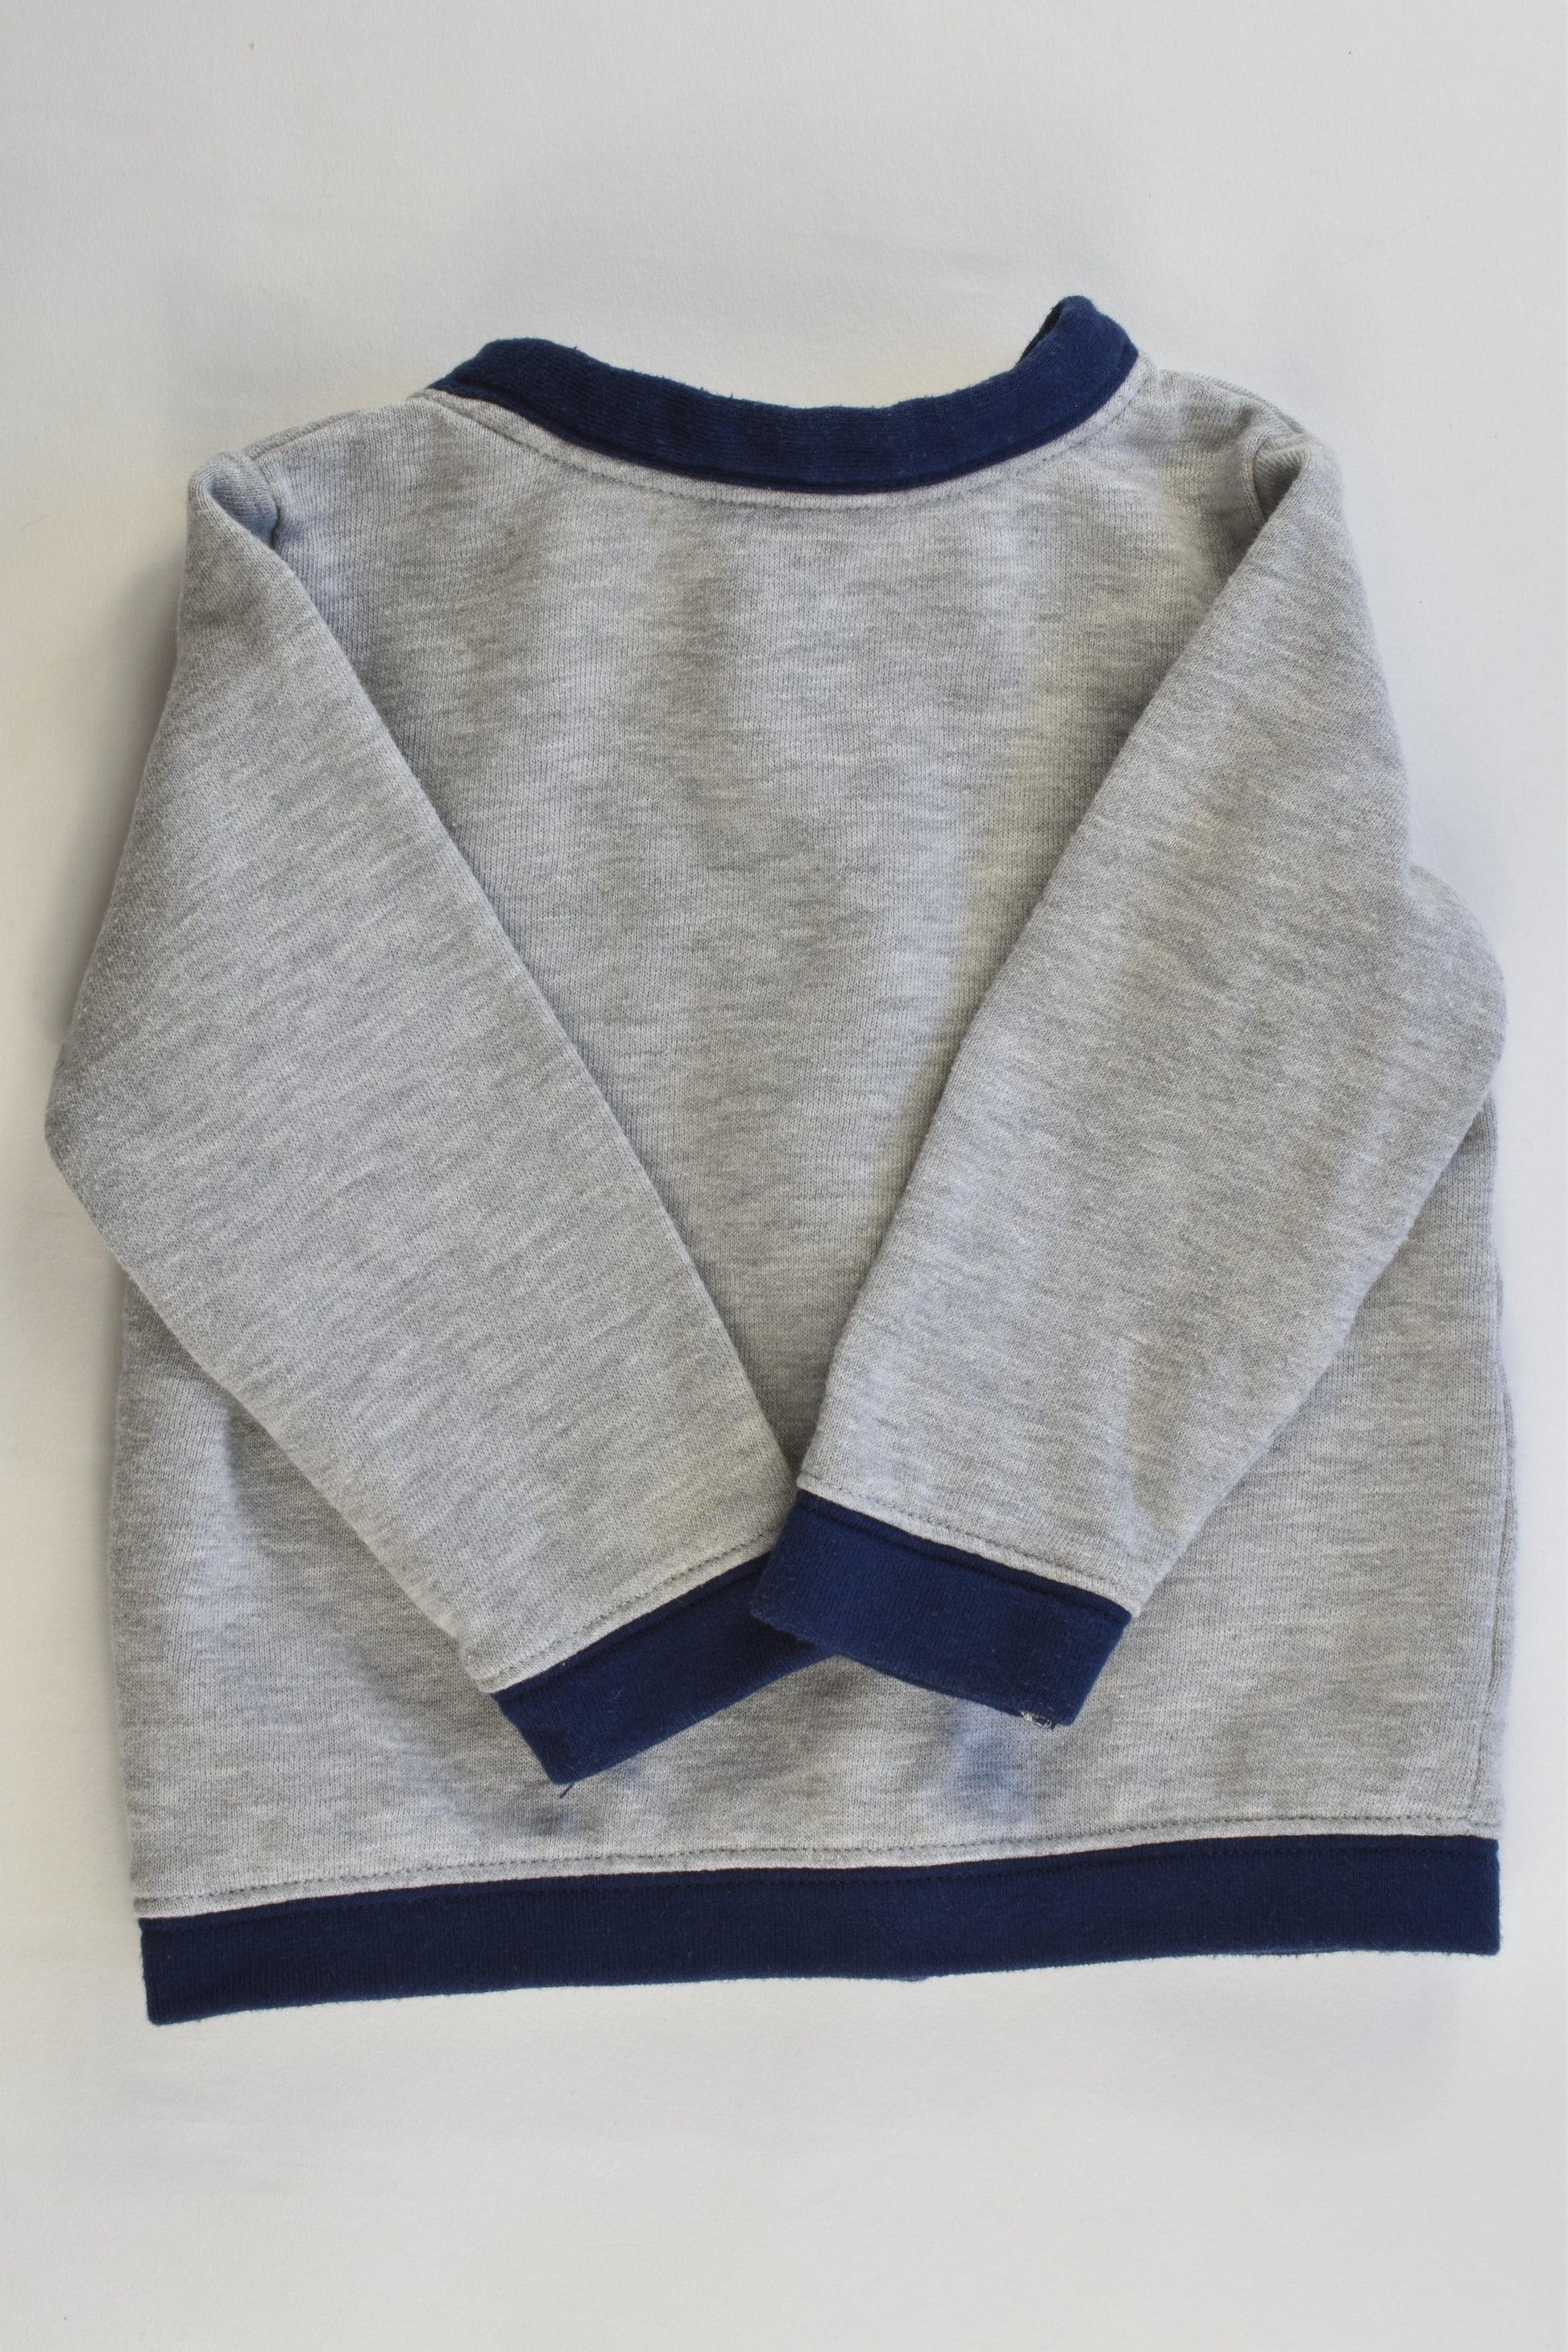 Target Size 12-18 months (1) Sweater Cardigan